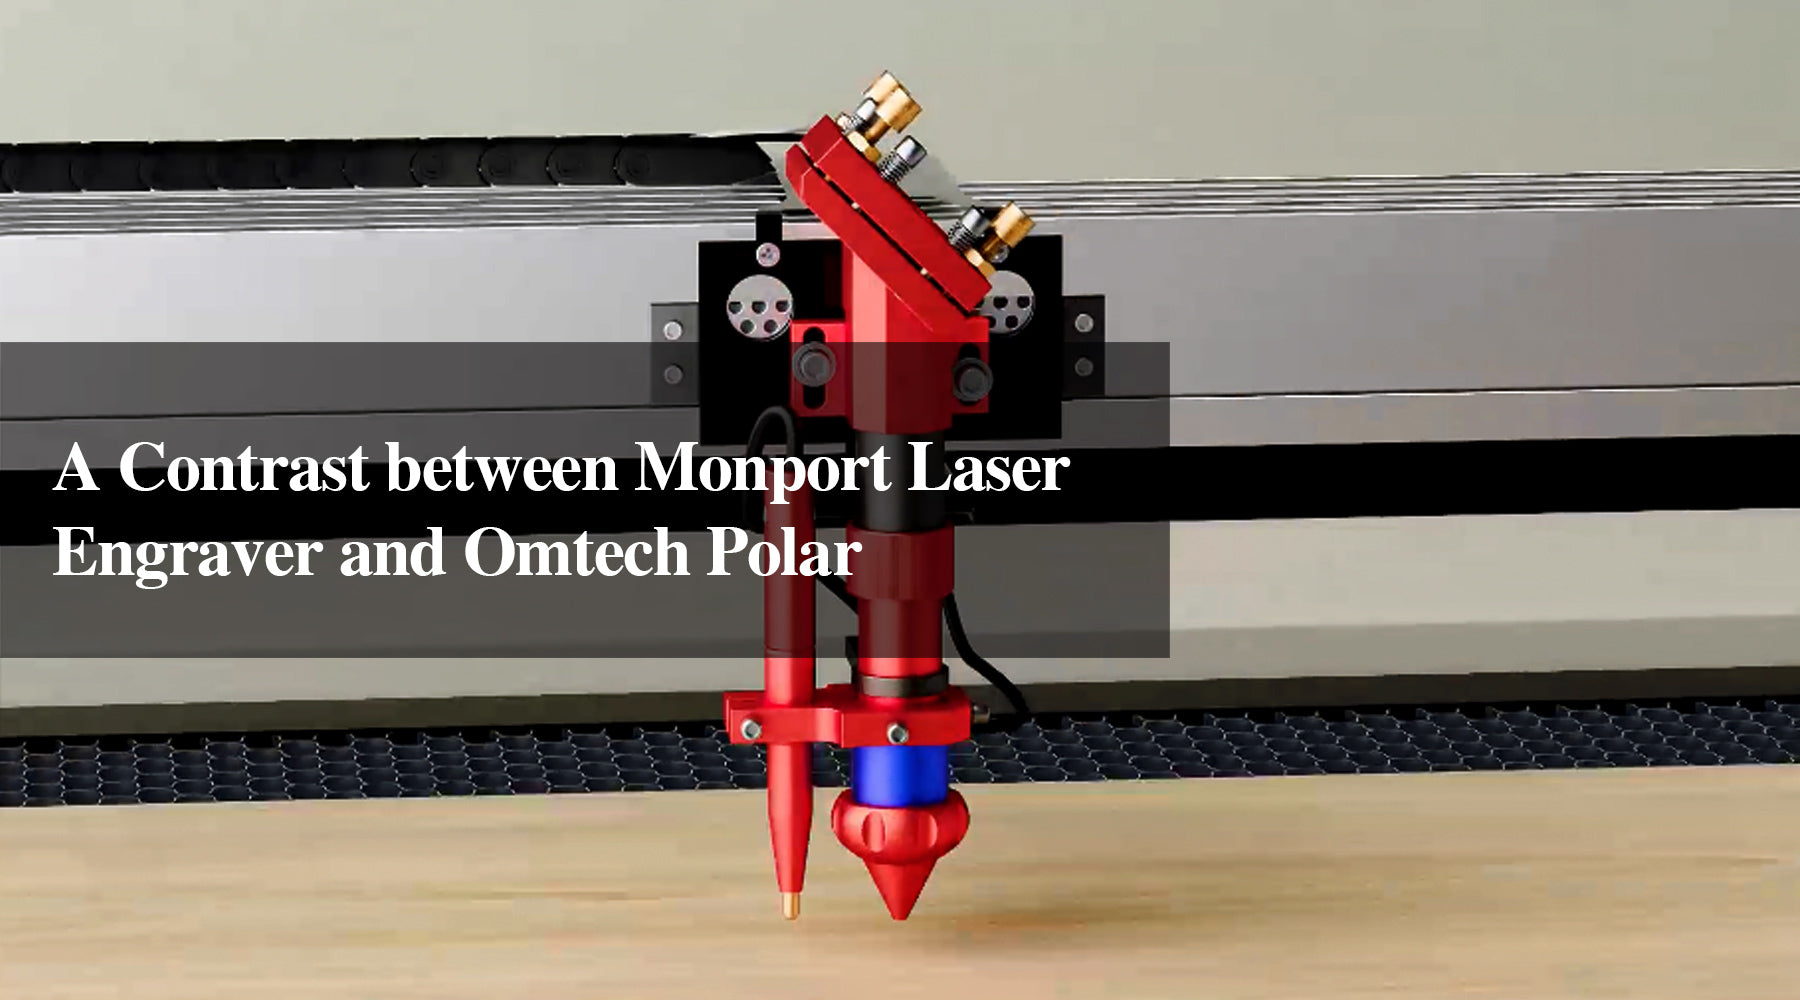 A Contrast between Monport Laser Engraver and Omtech Polar